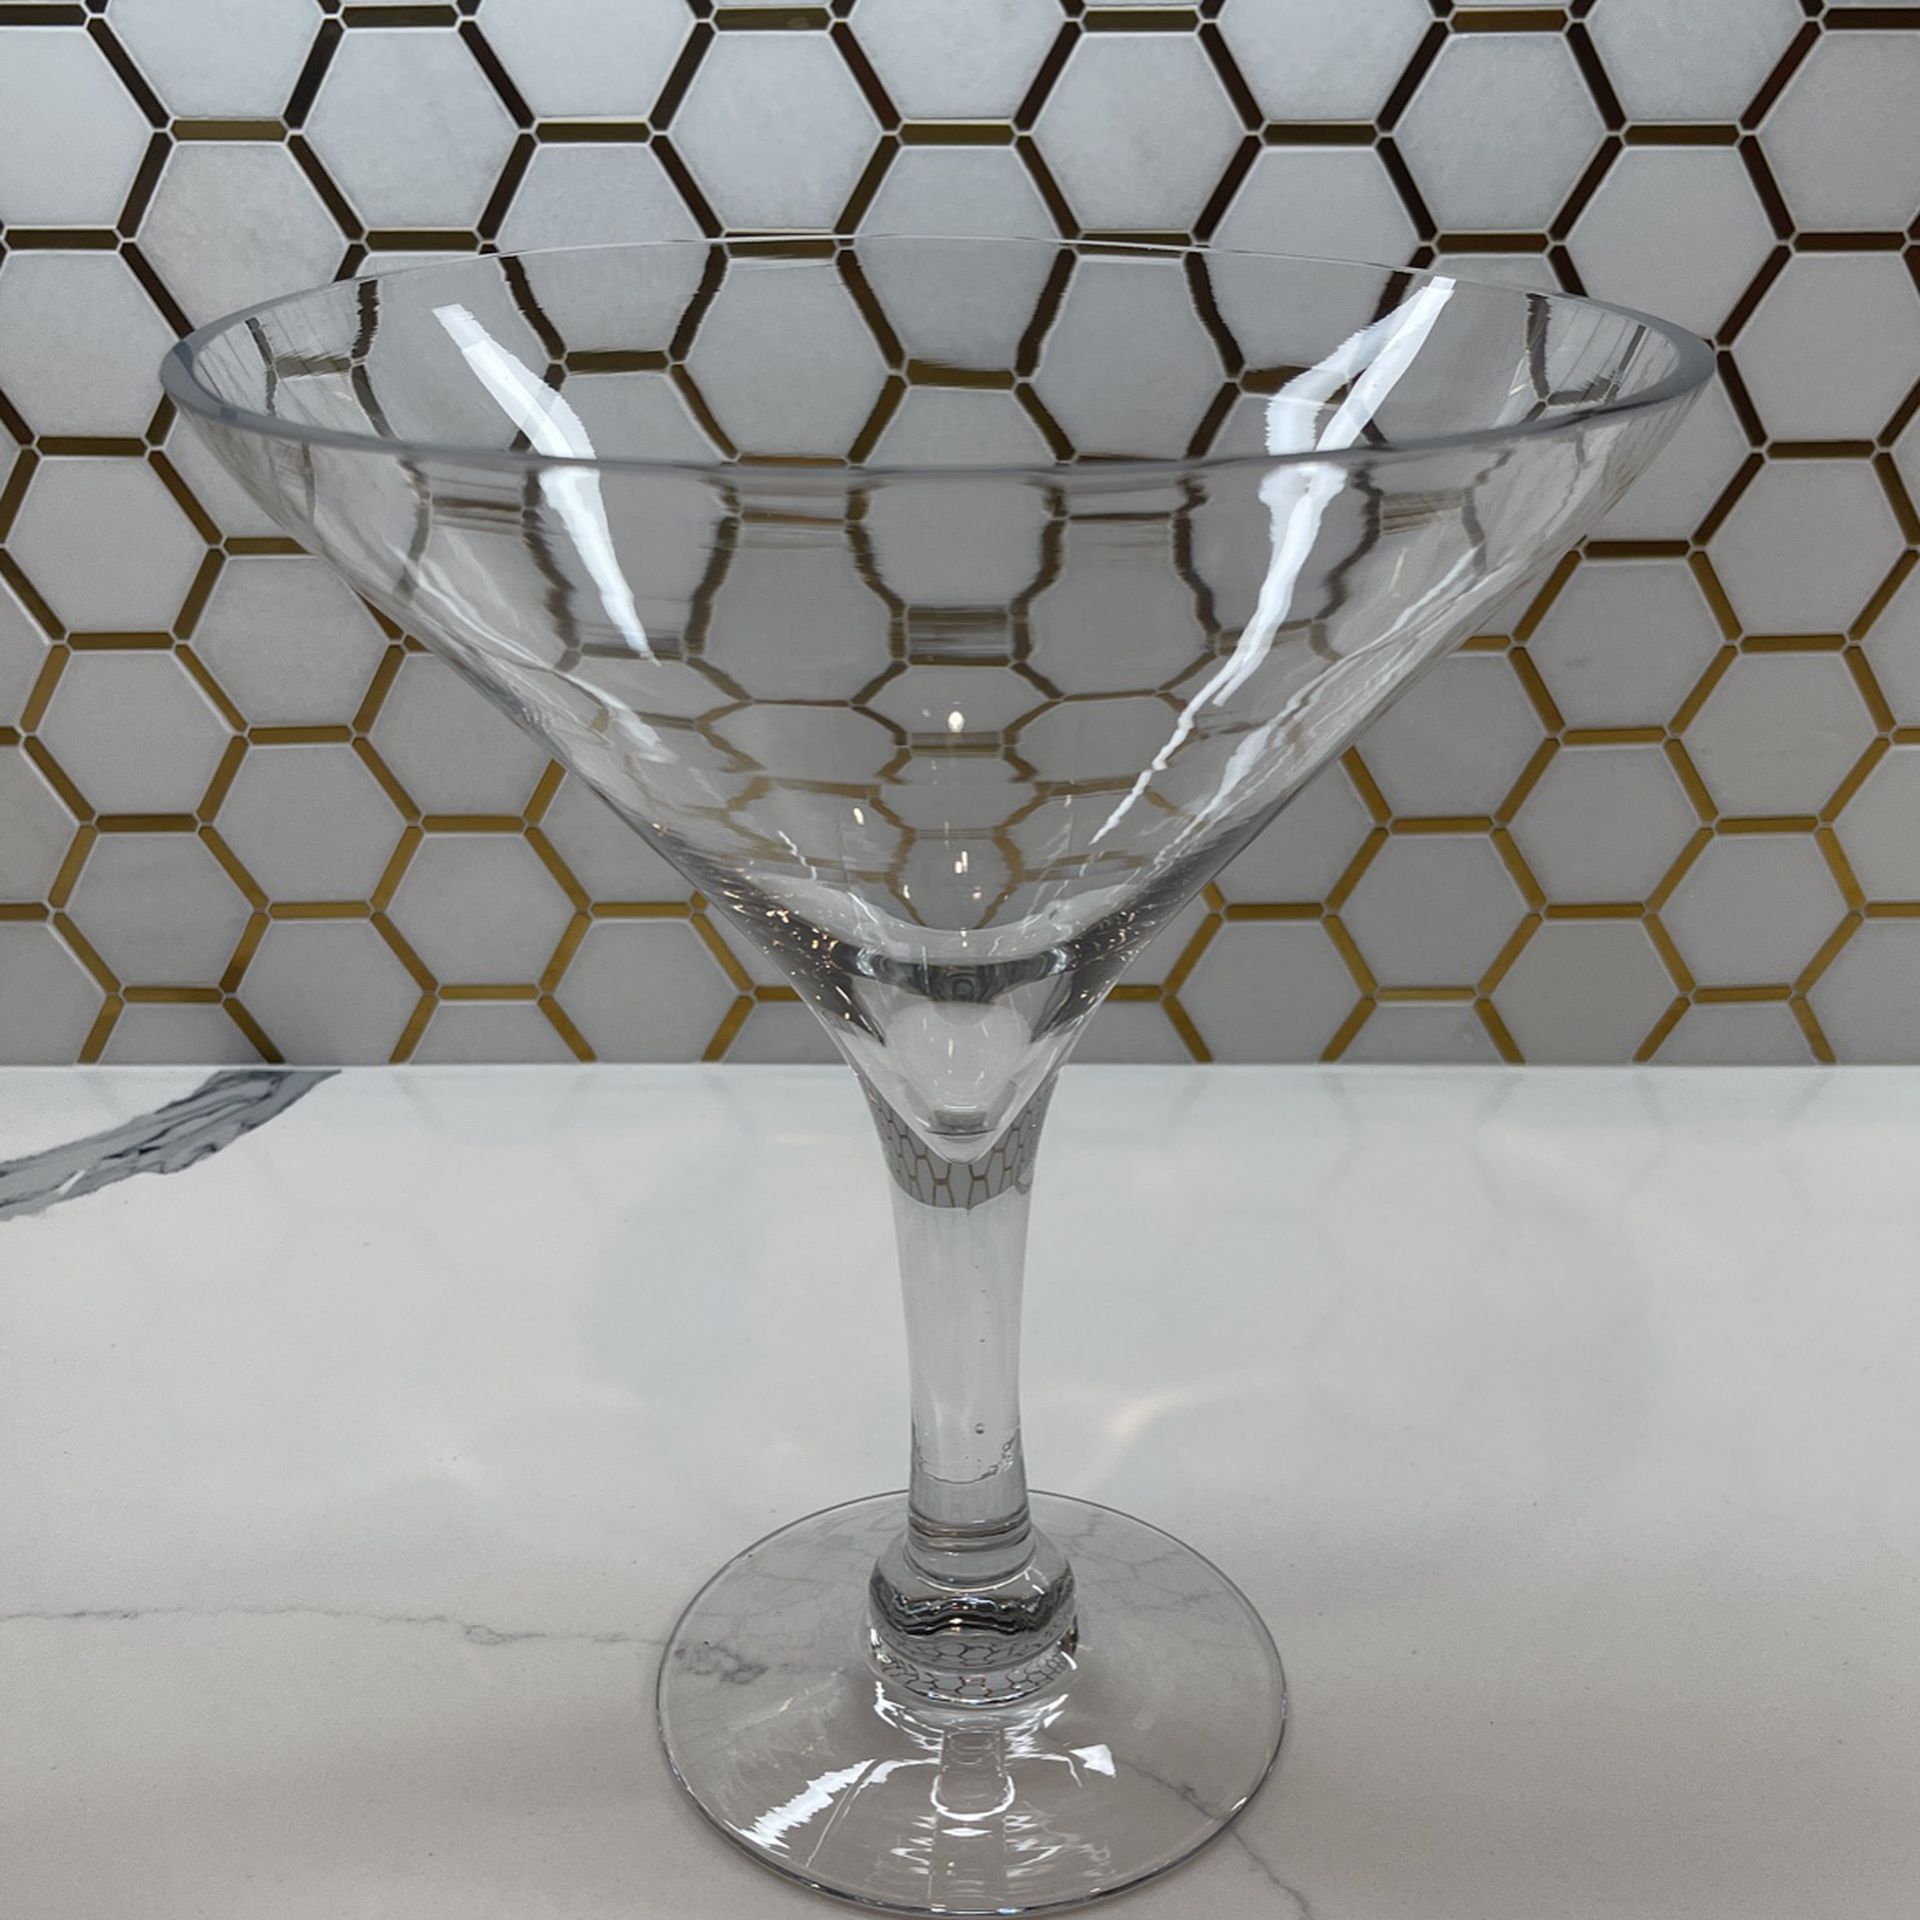 Jumbo Martini Glass Vase Centerpiece, 23-Inch, 2-Count